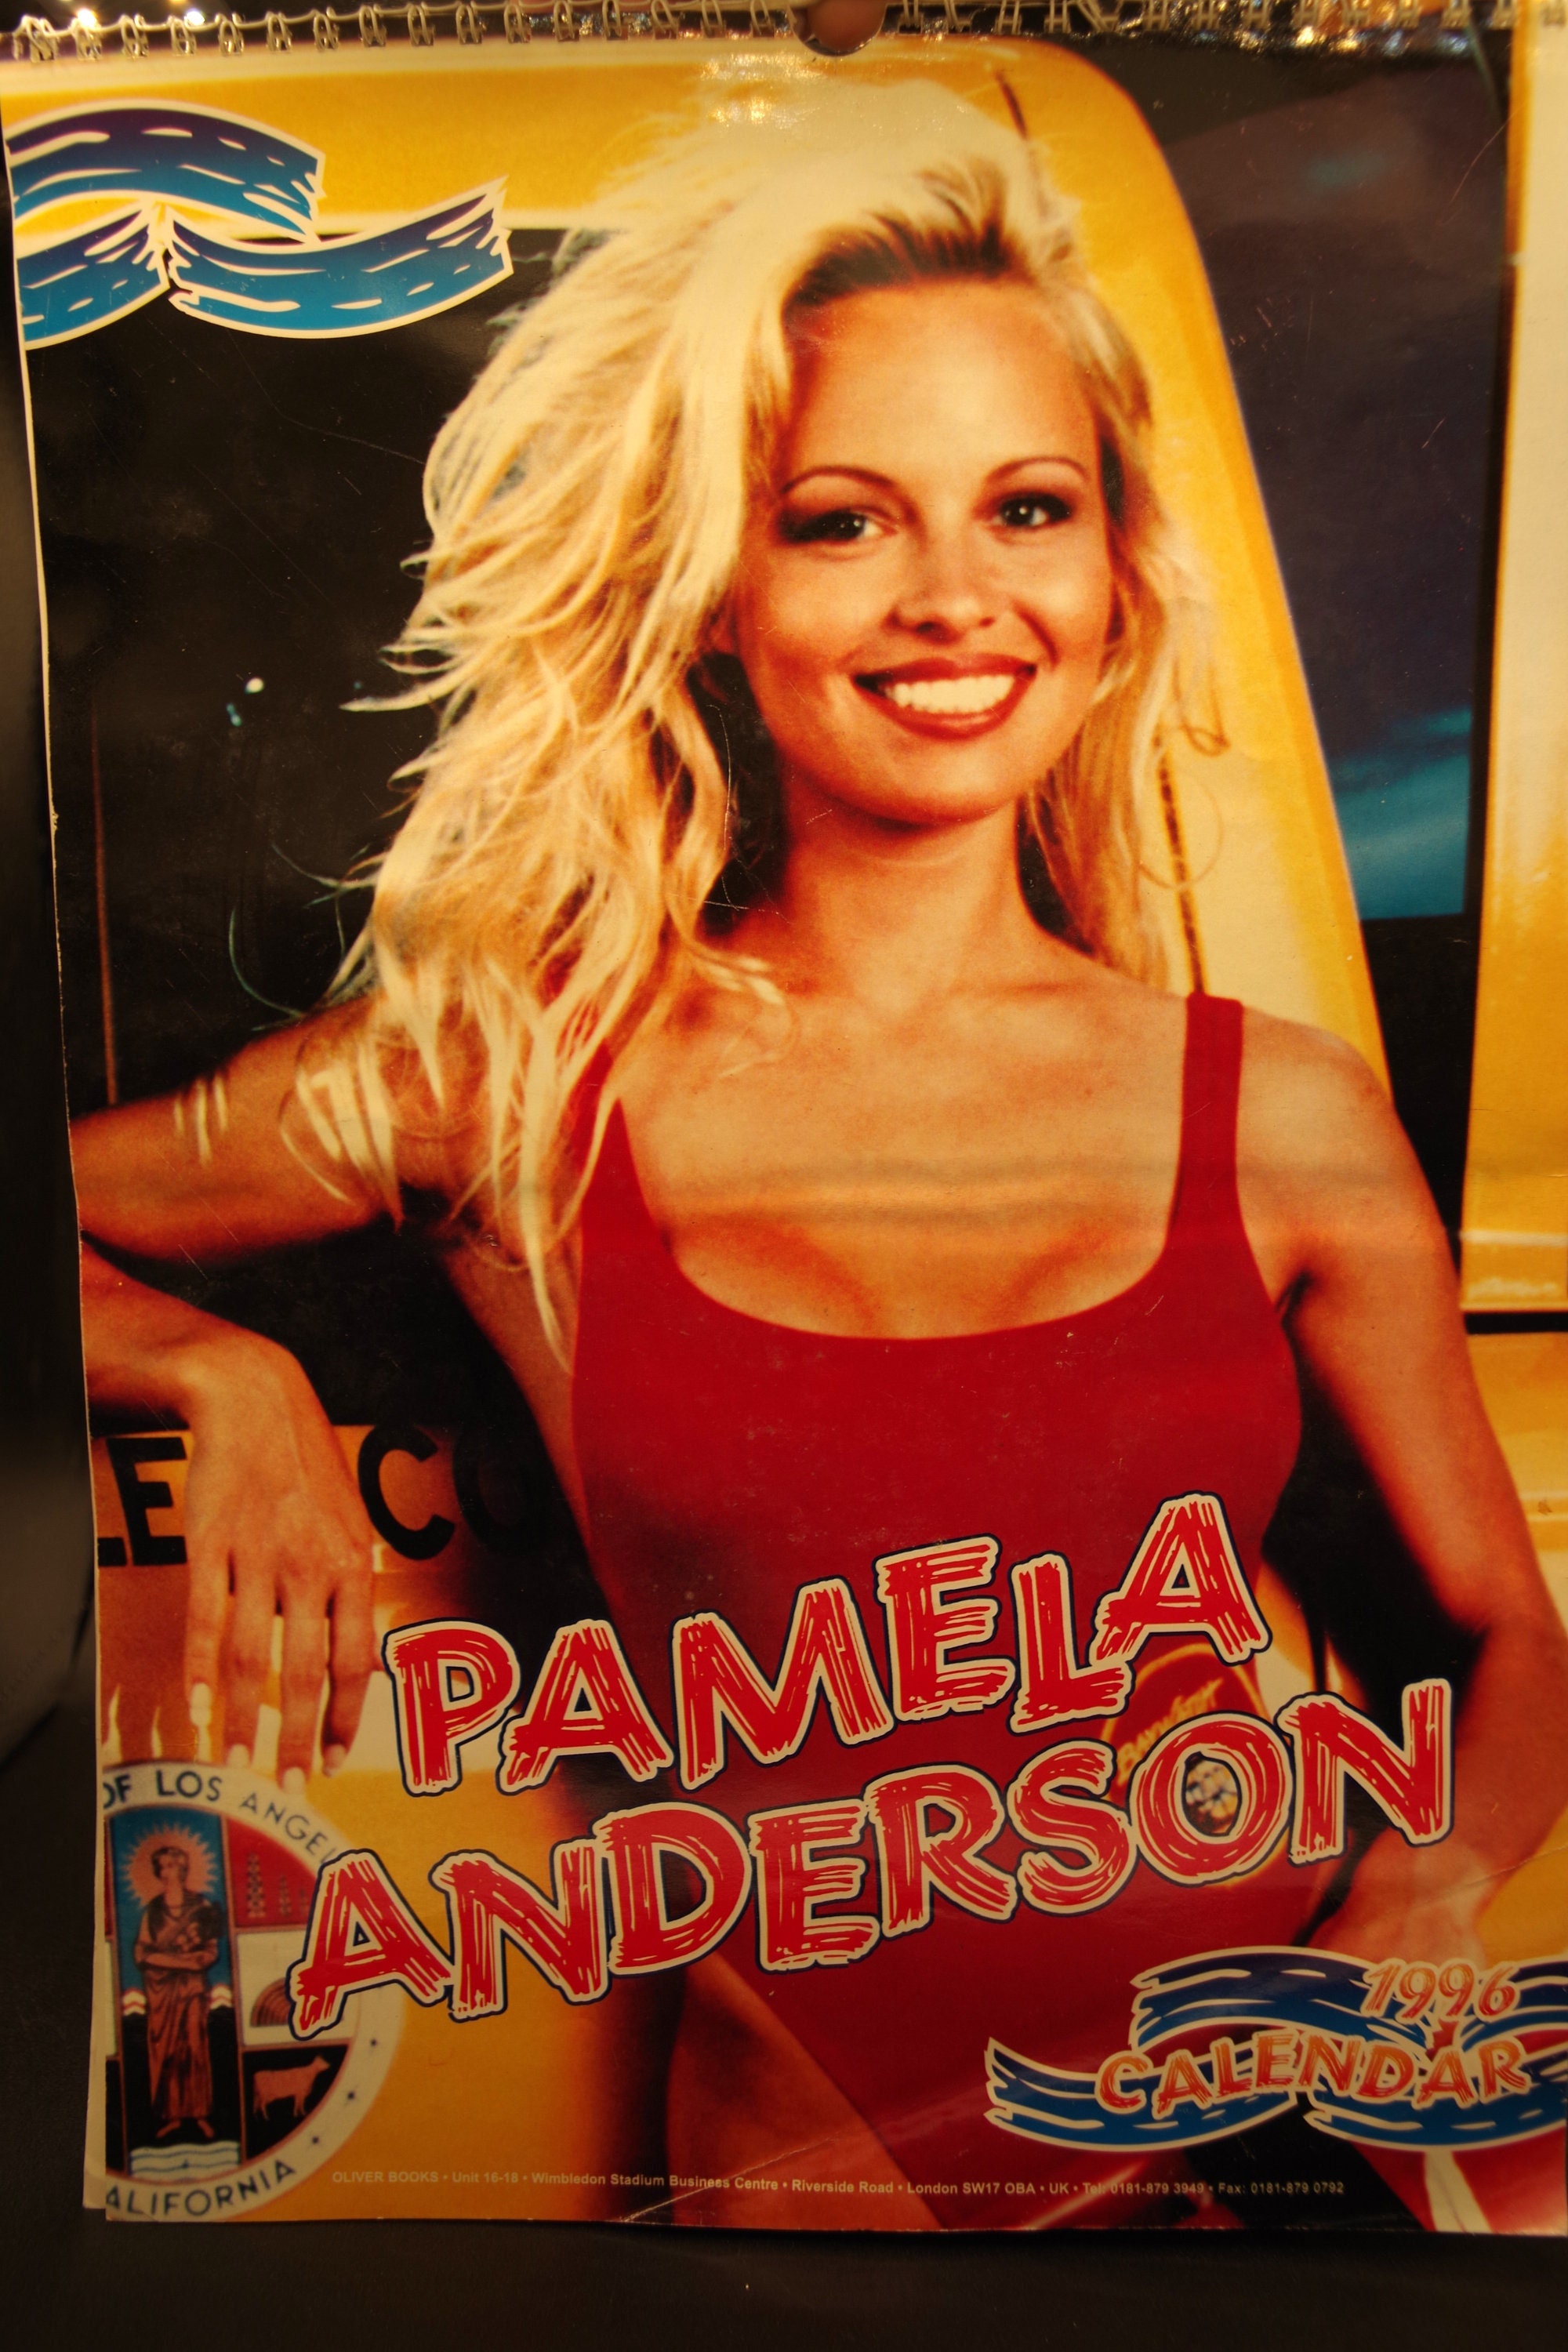 1996 Pamela Anderson Calendar by Oliver Books Made in UK